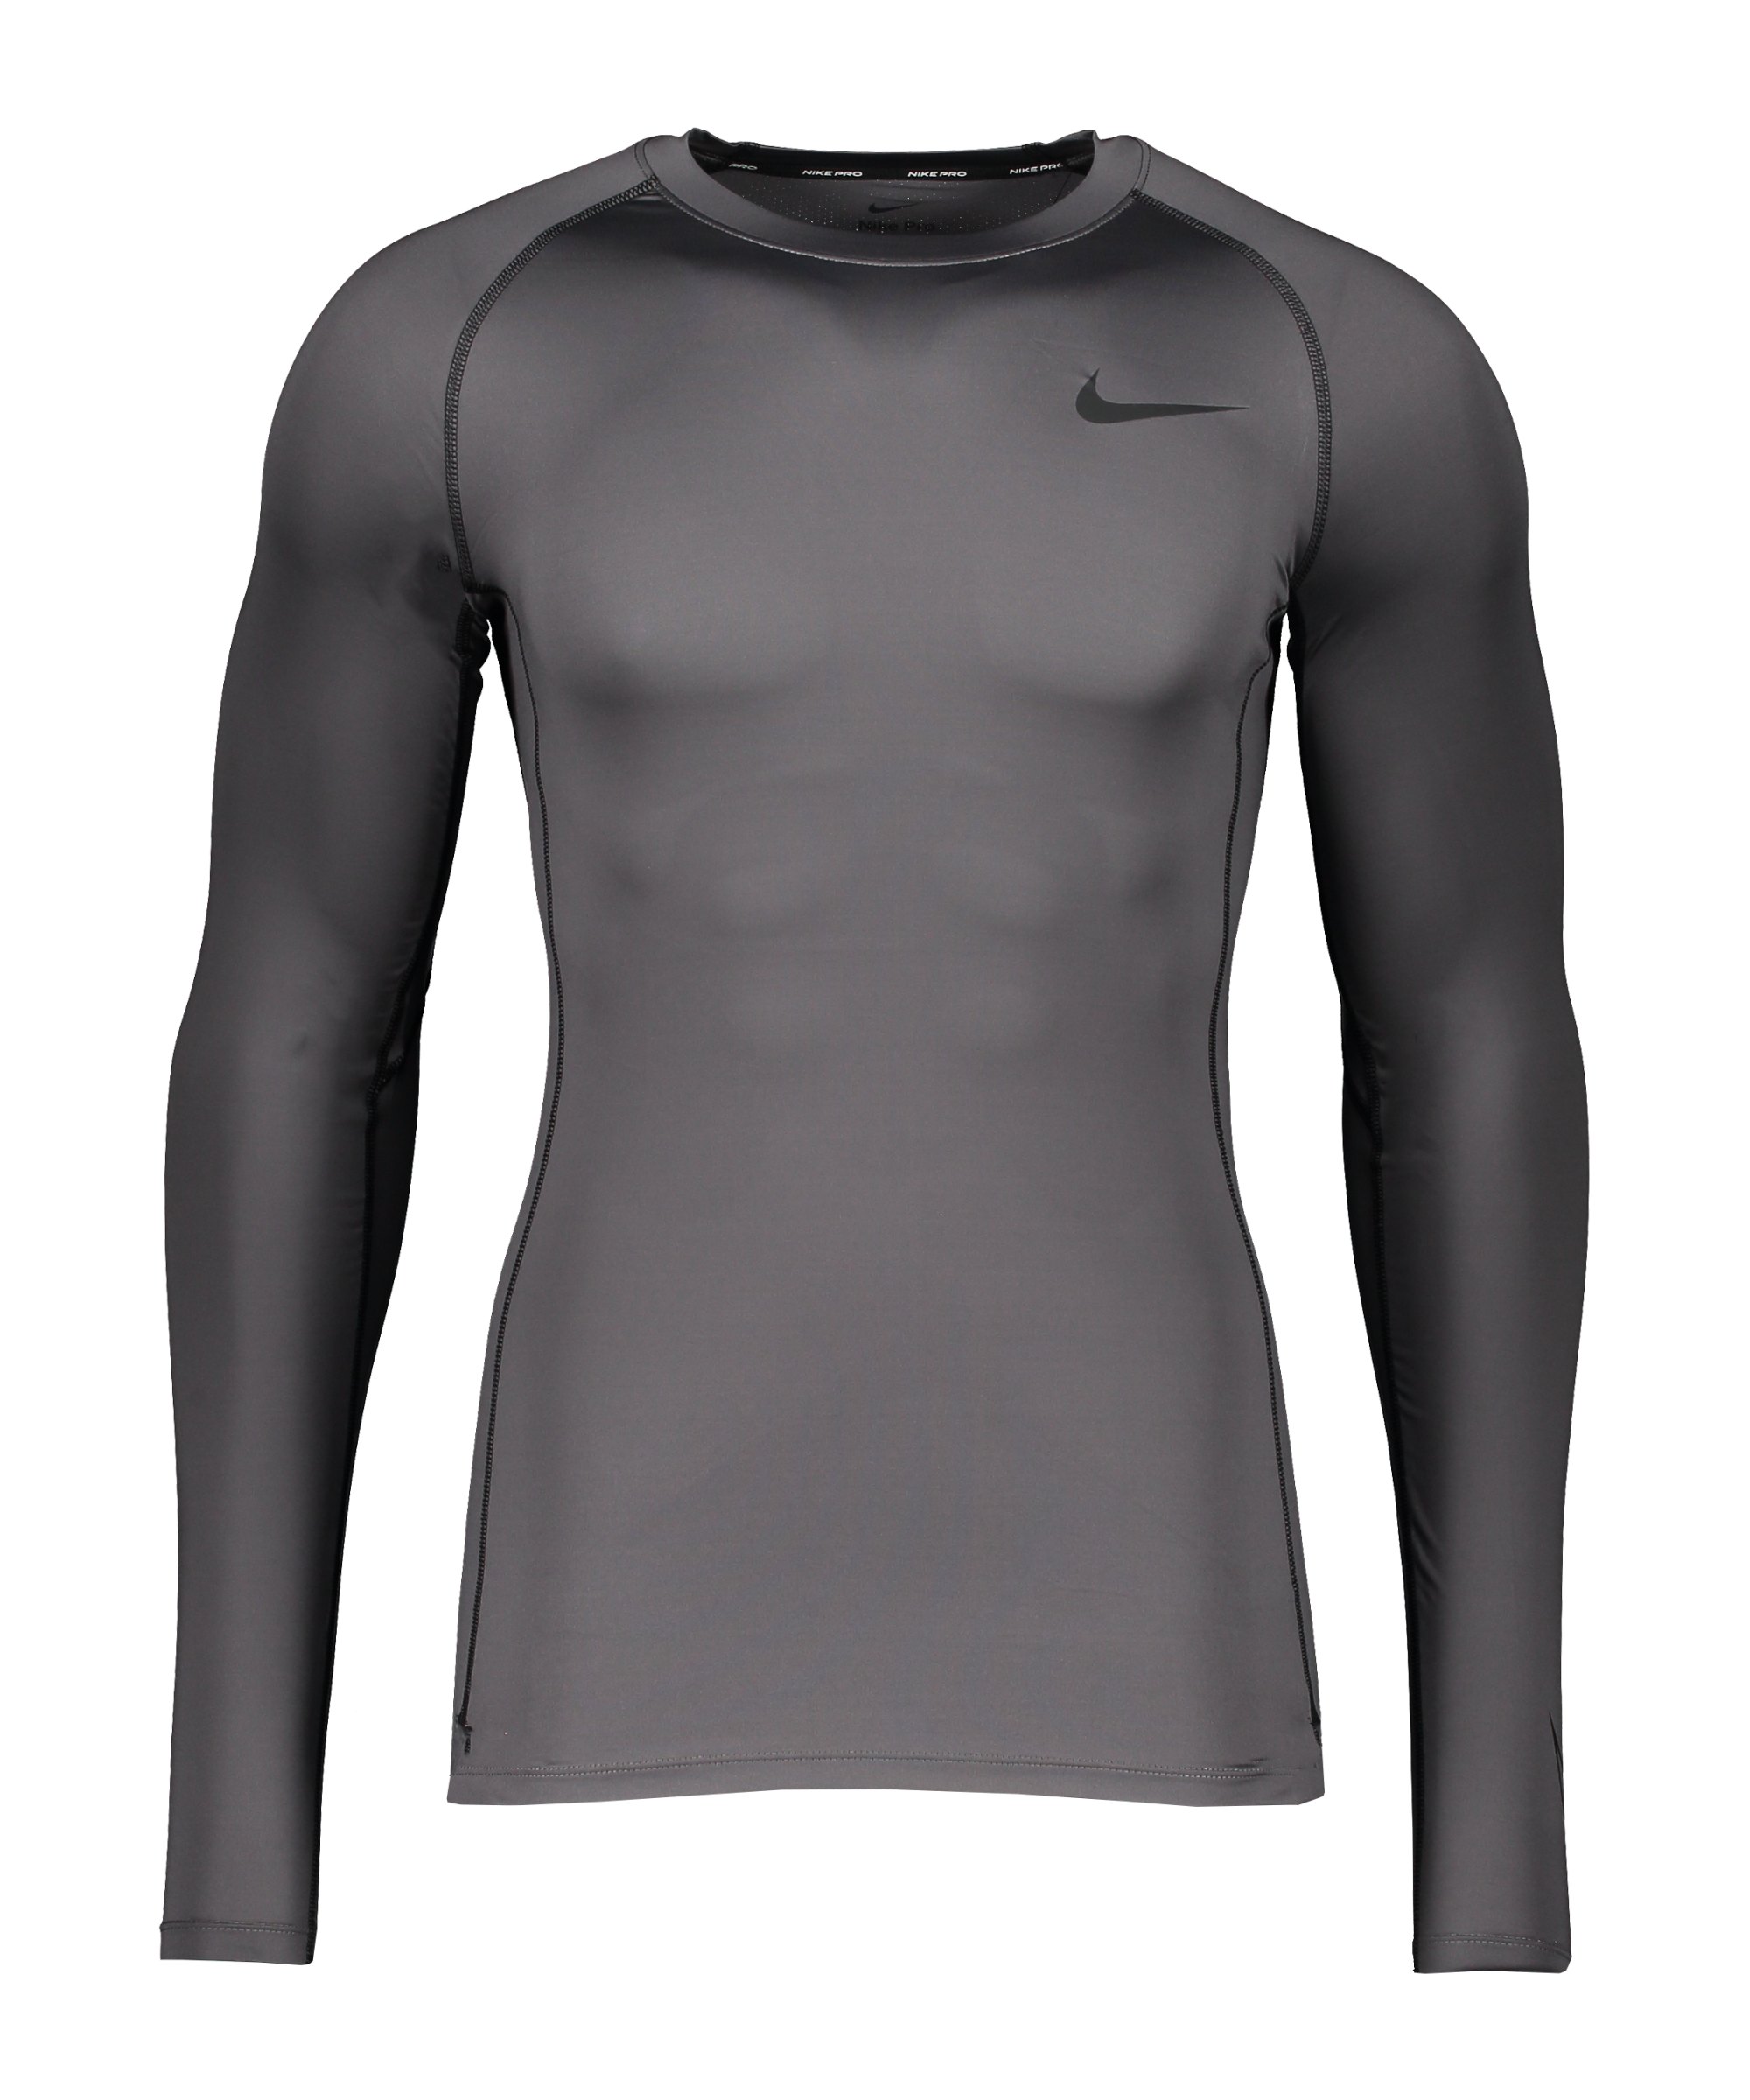 Nike Pro Longsleeve Grau Schwarz F068 - grau